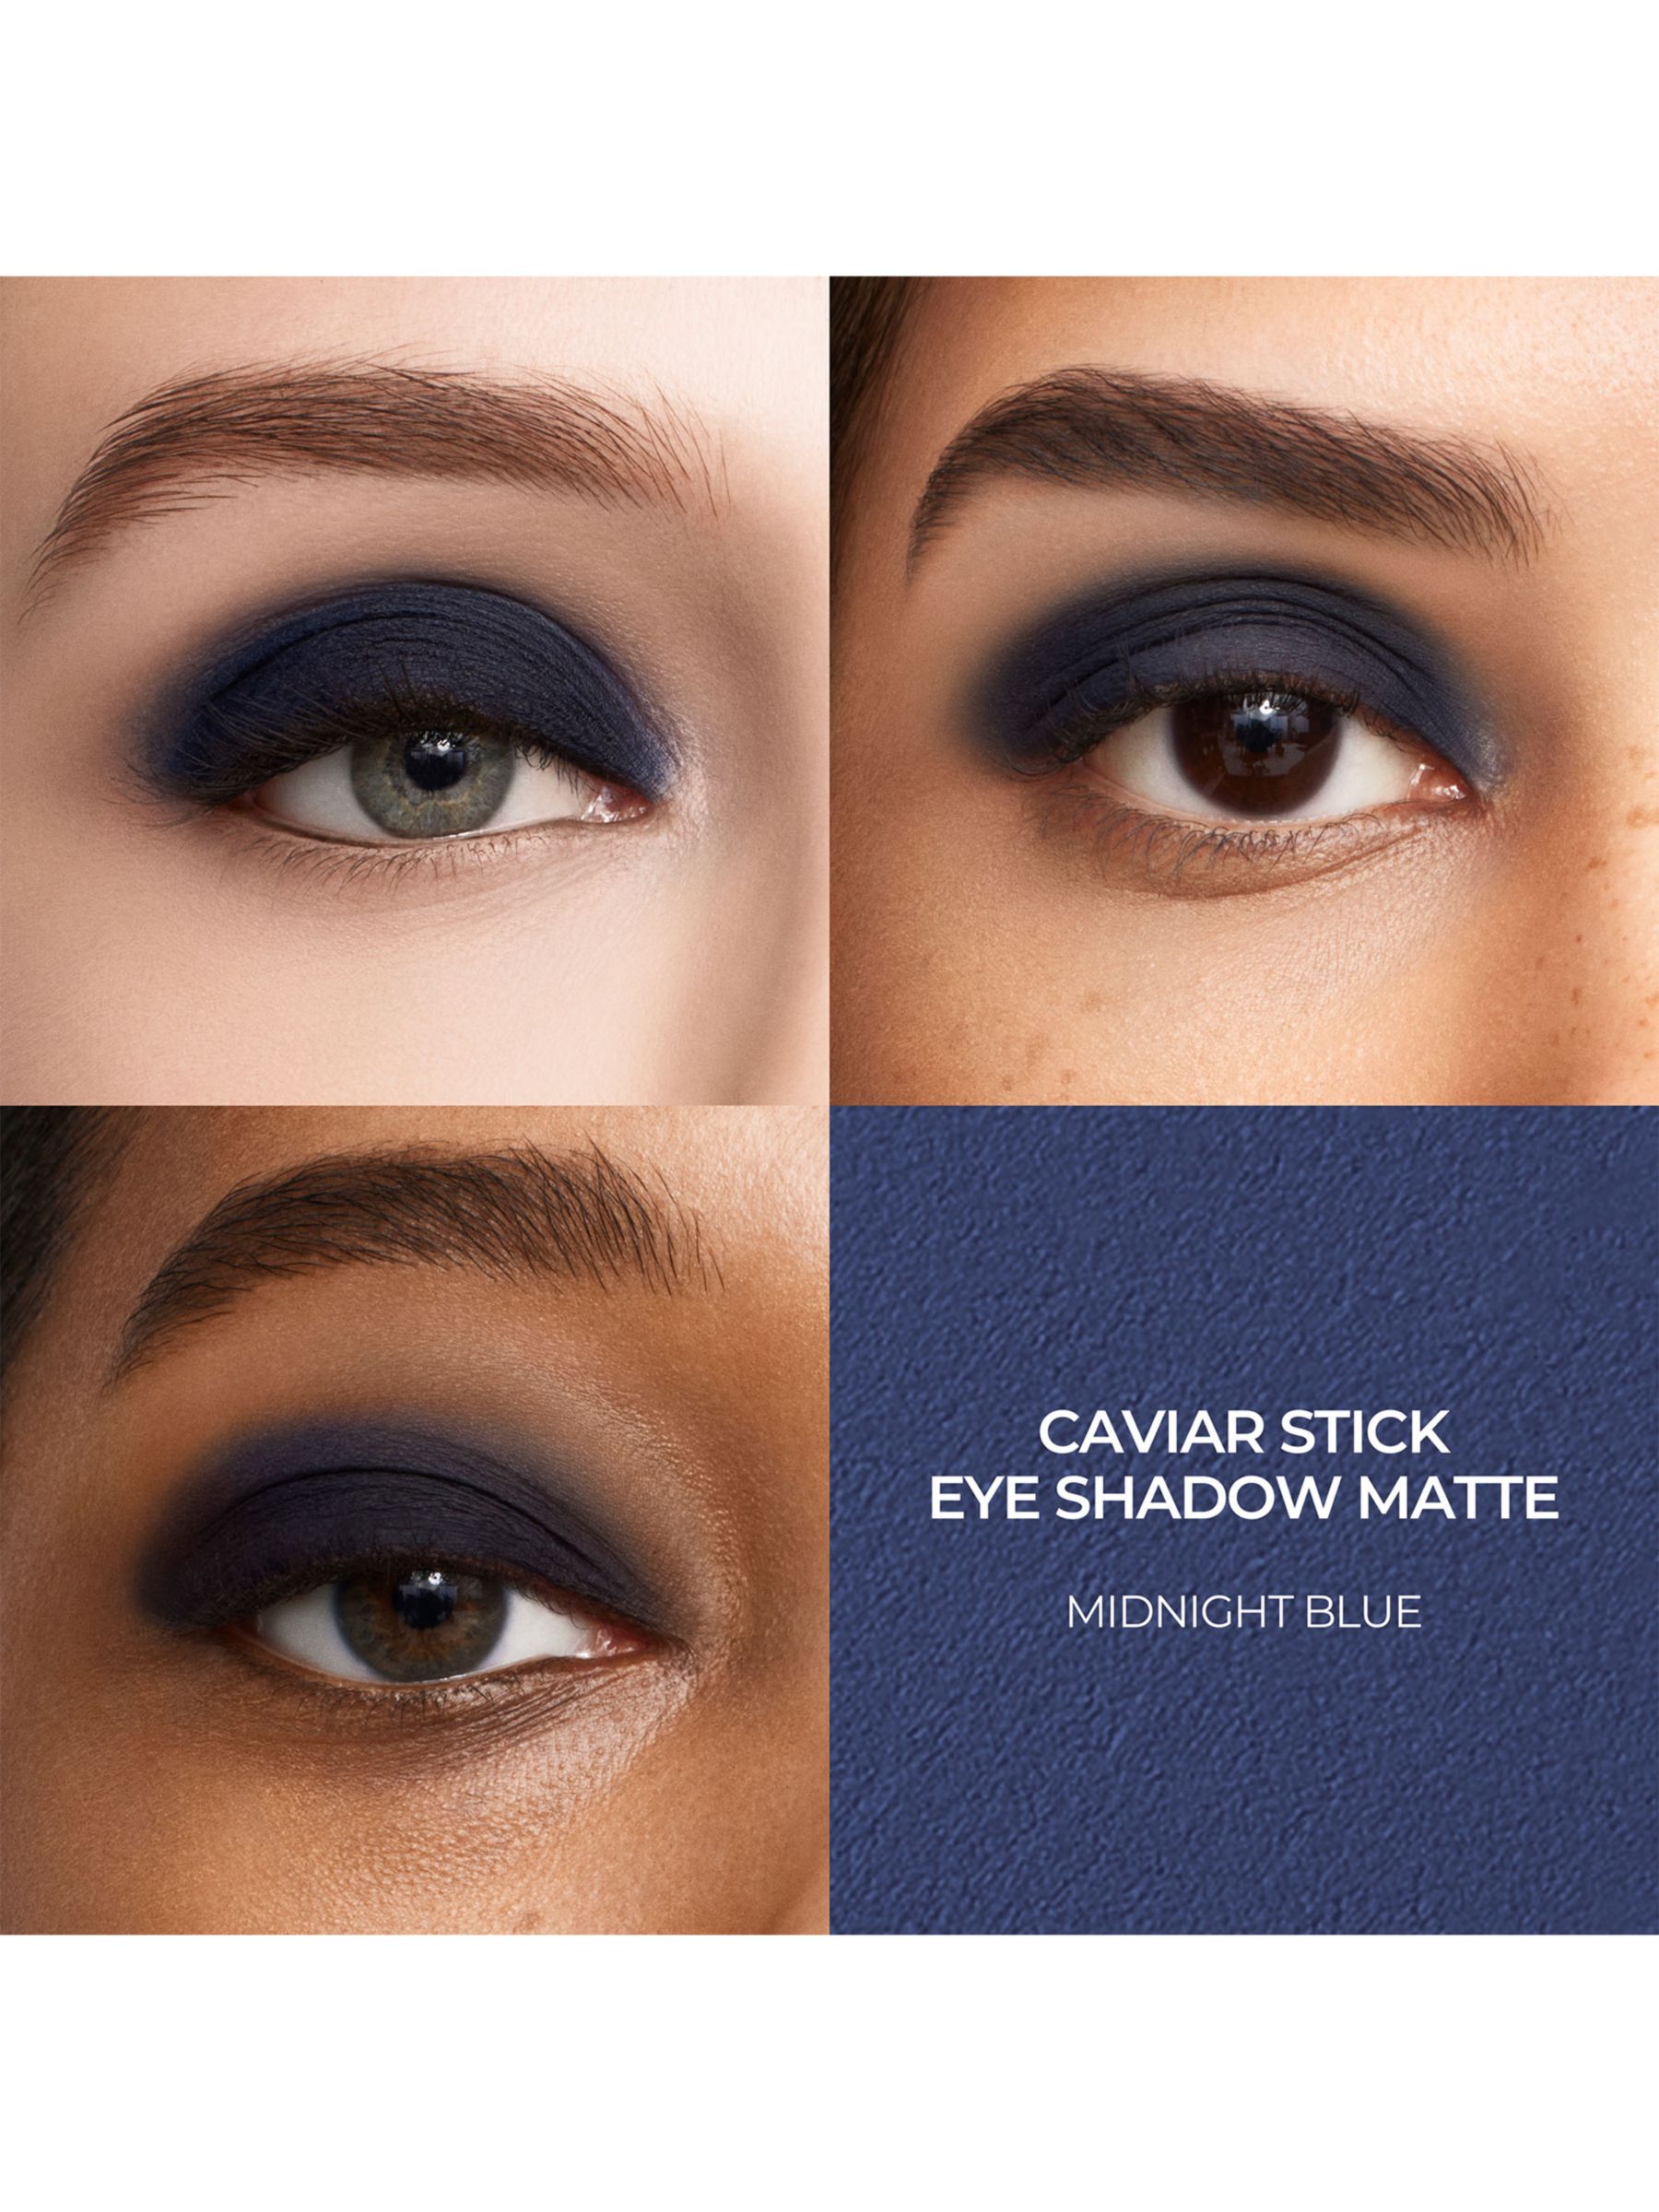 Laura Mercier Caviar Stick Eyeshadow Matte, Midnight Blue